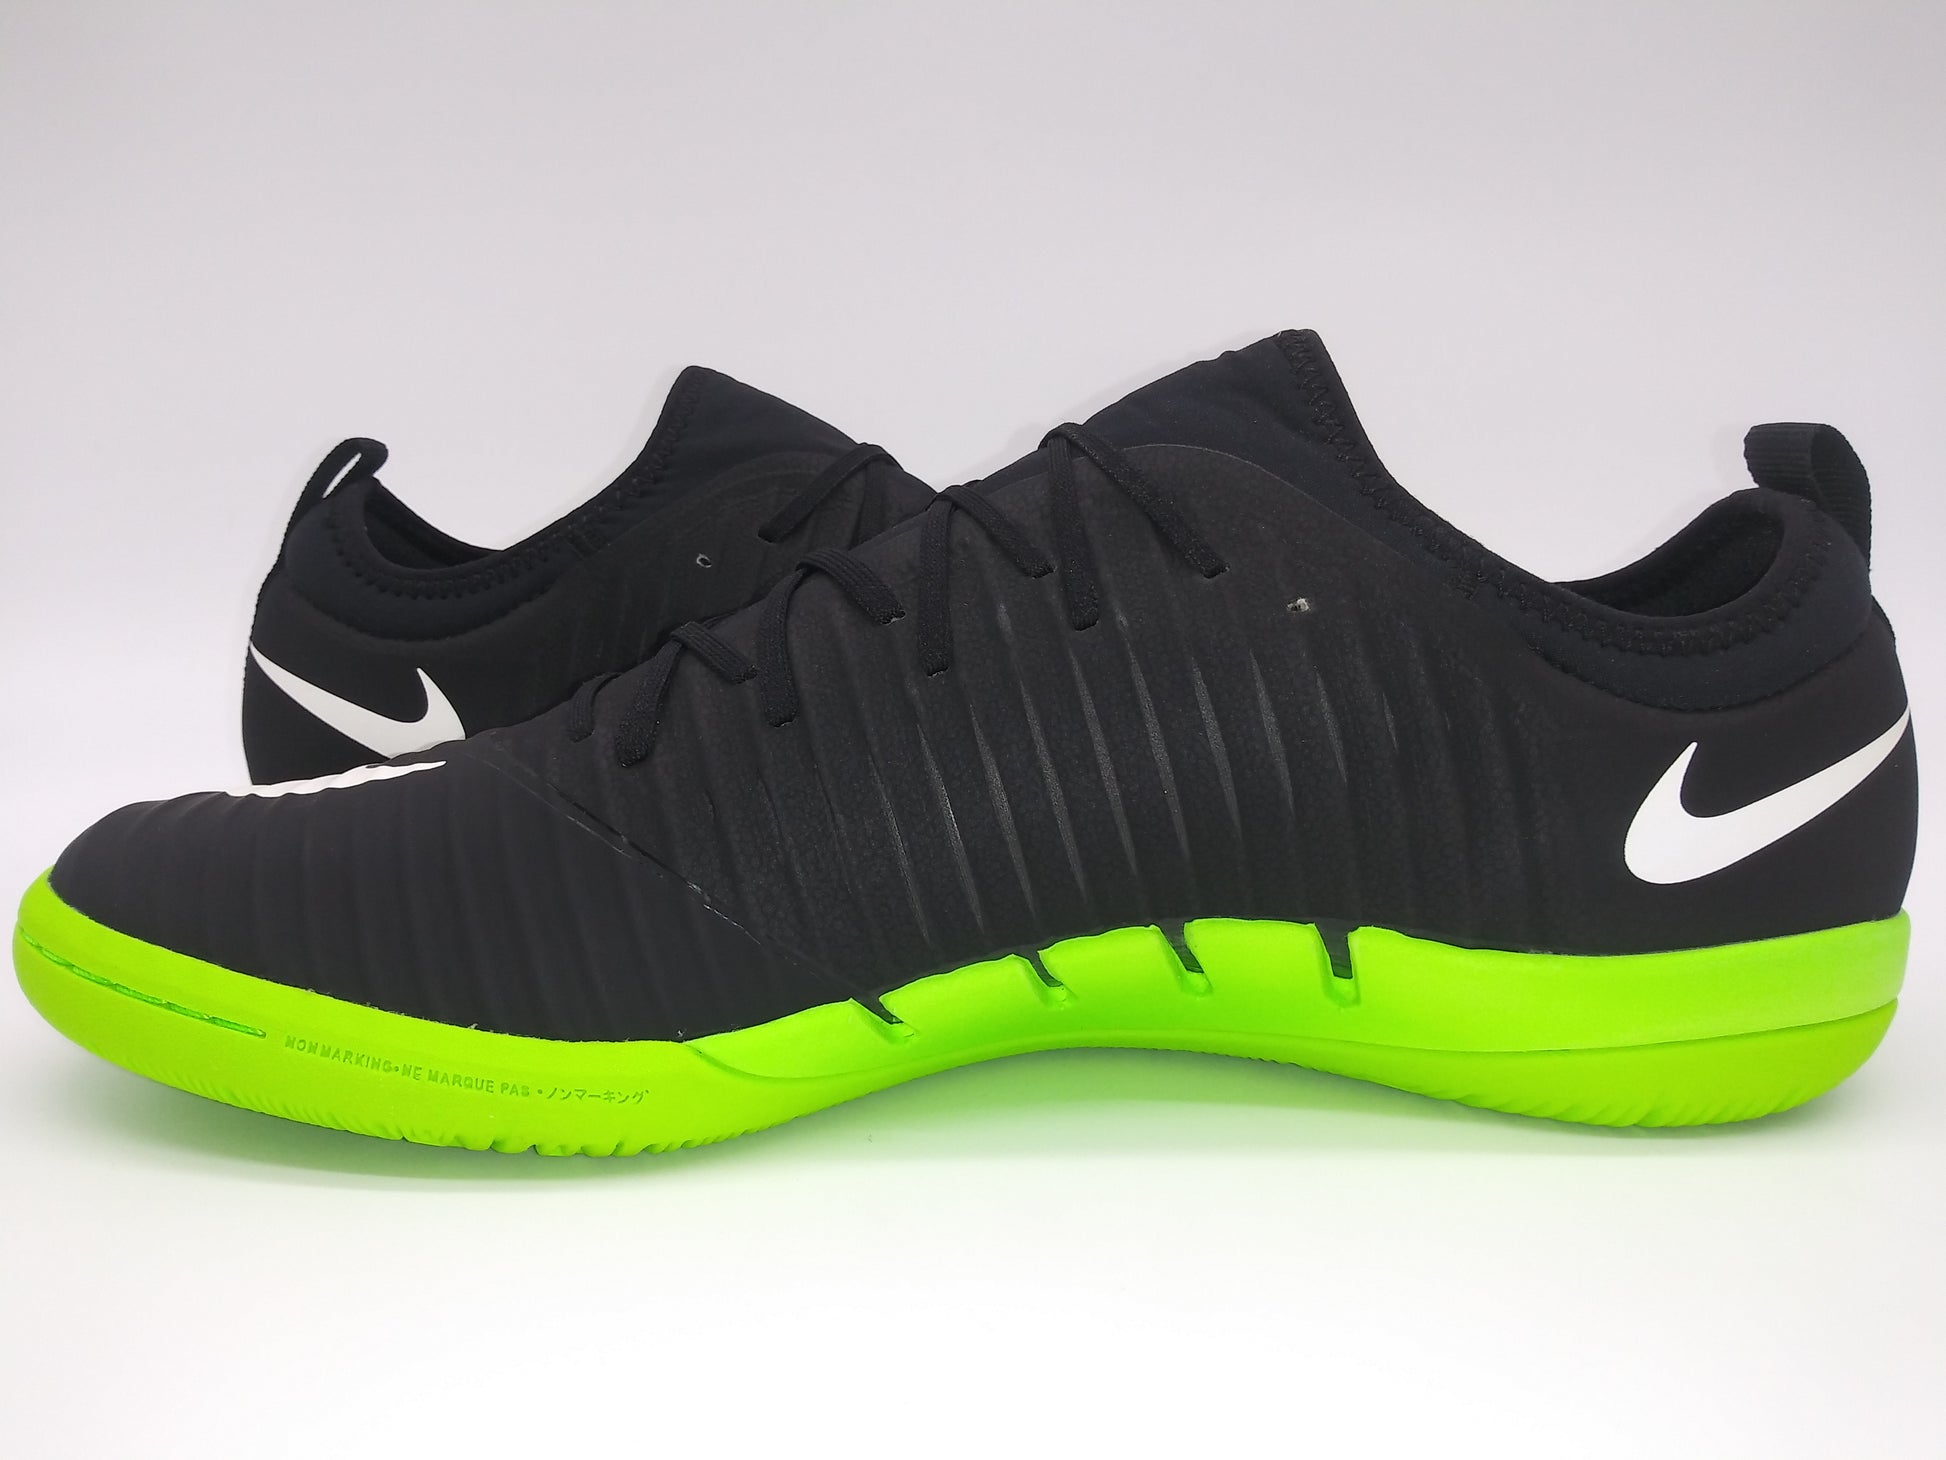 Nike Mercurialx Finale II IC Black Green Footwear